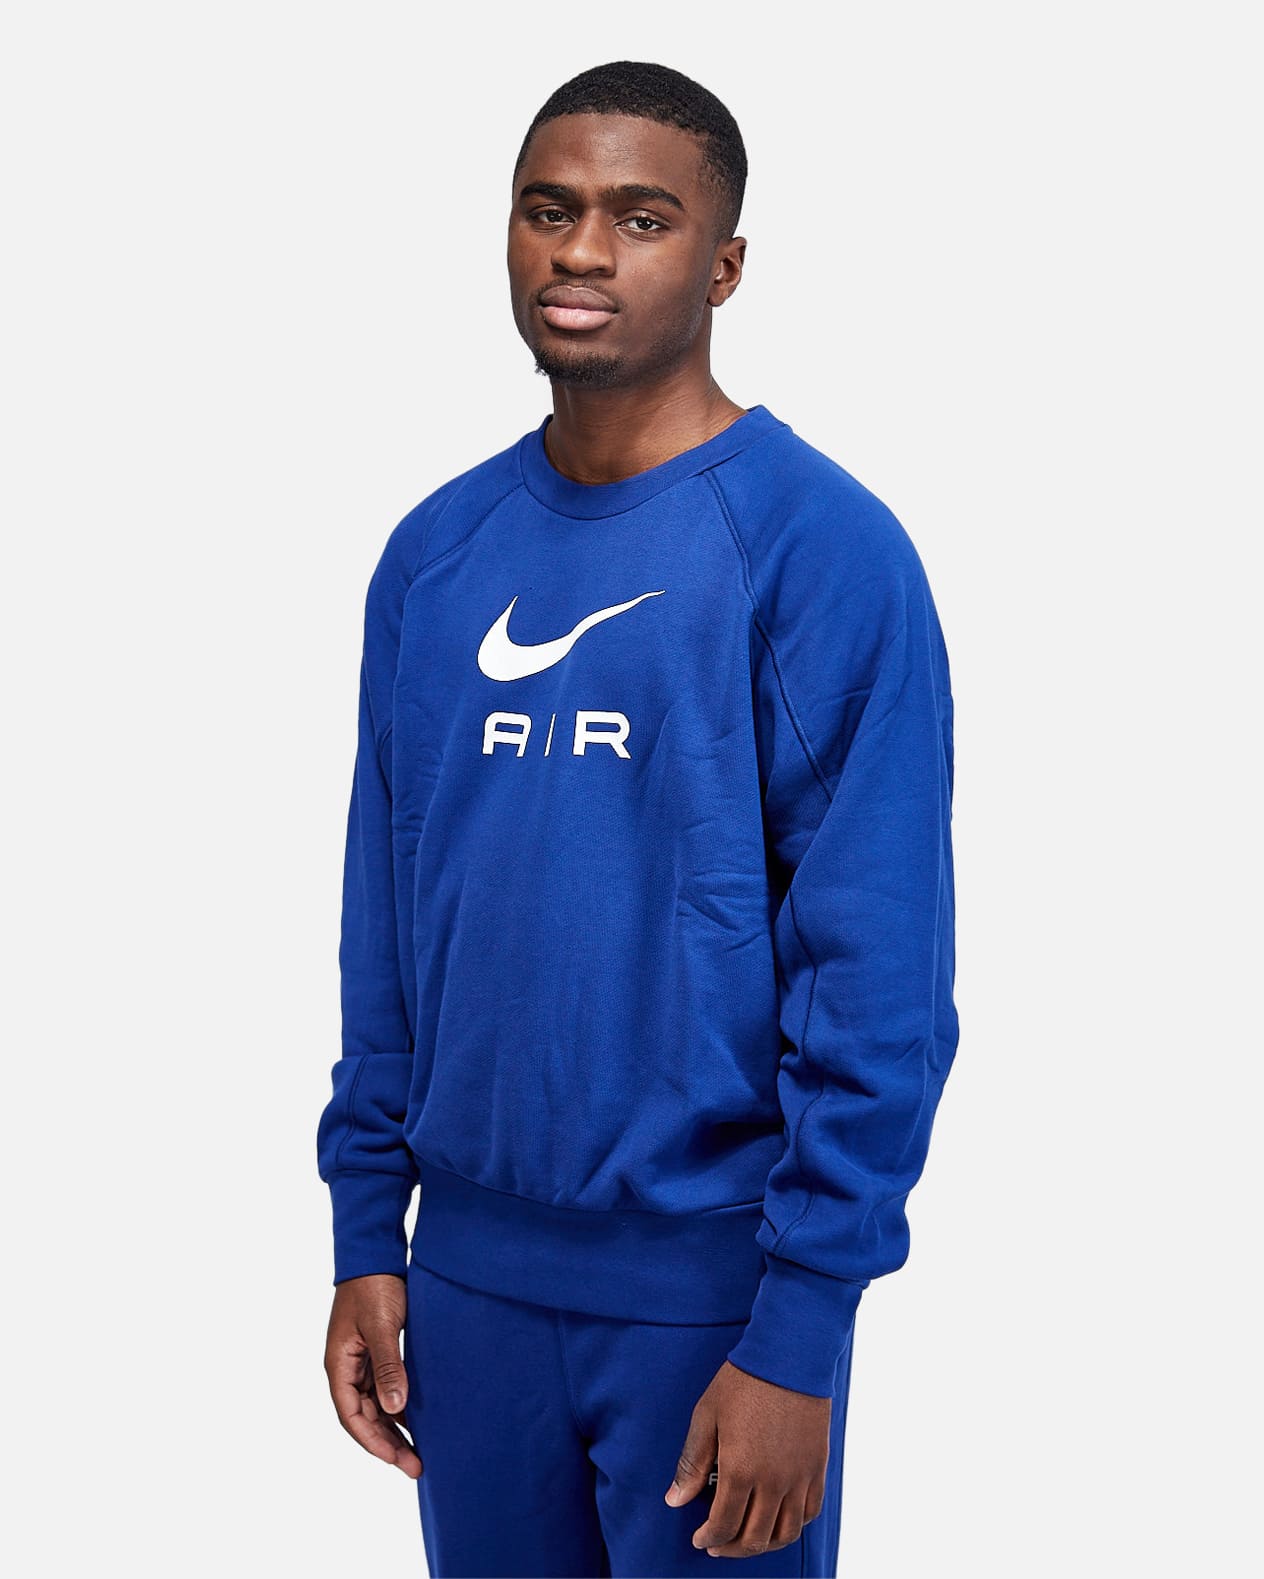 Nike Air Sweatshirt - Blue/White